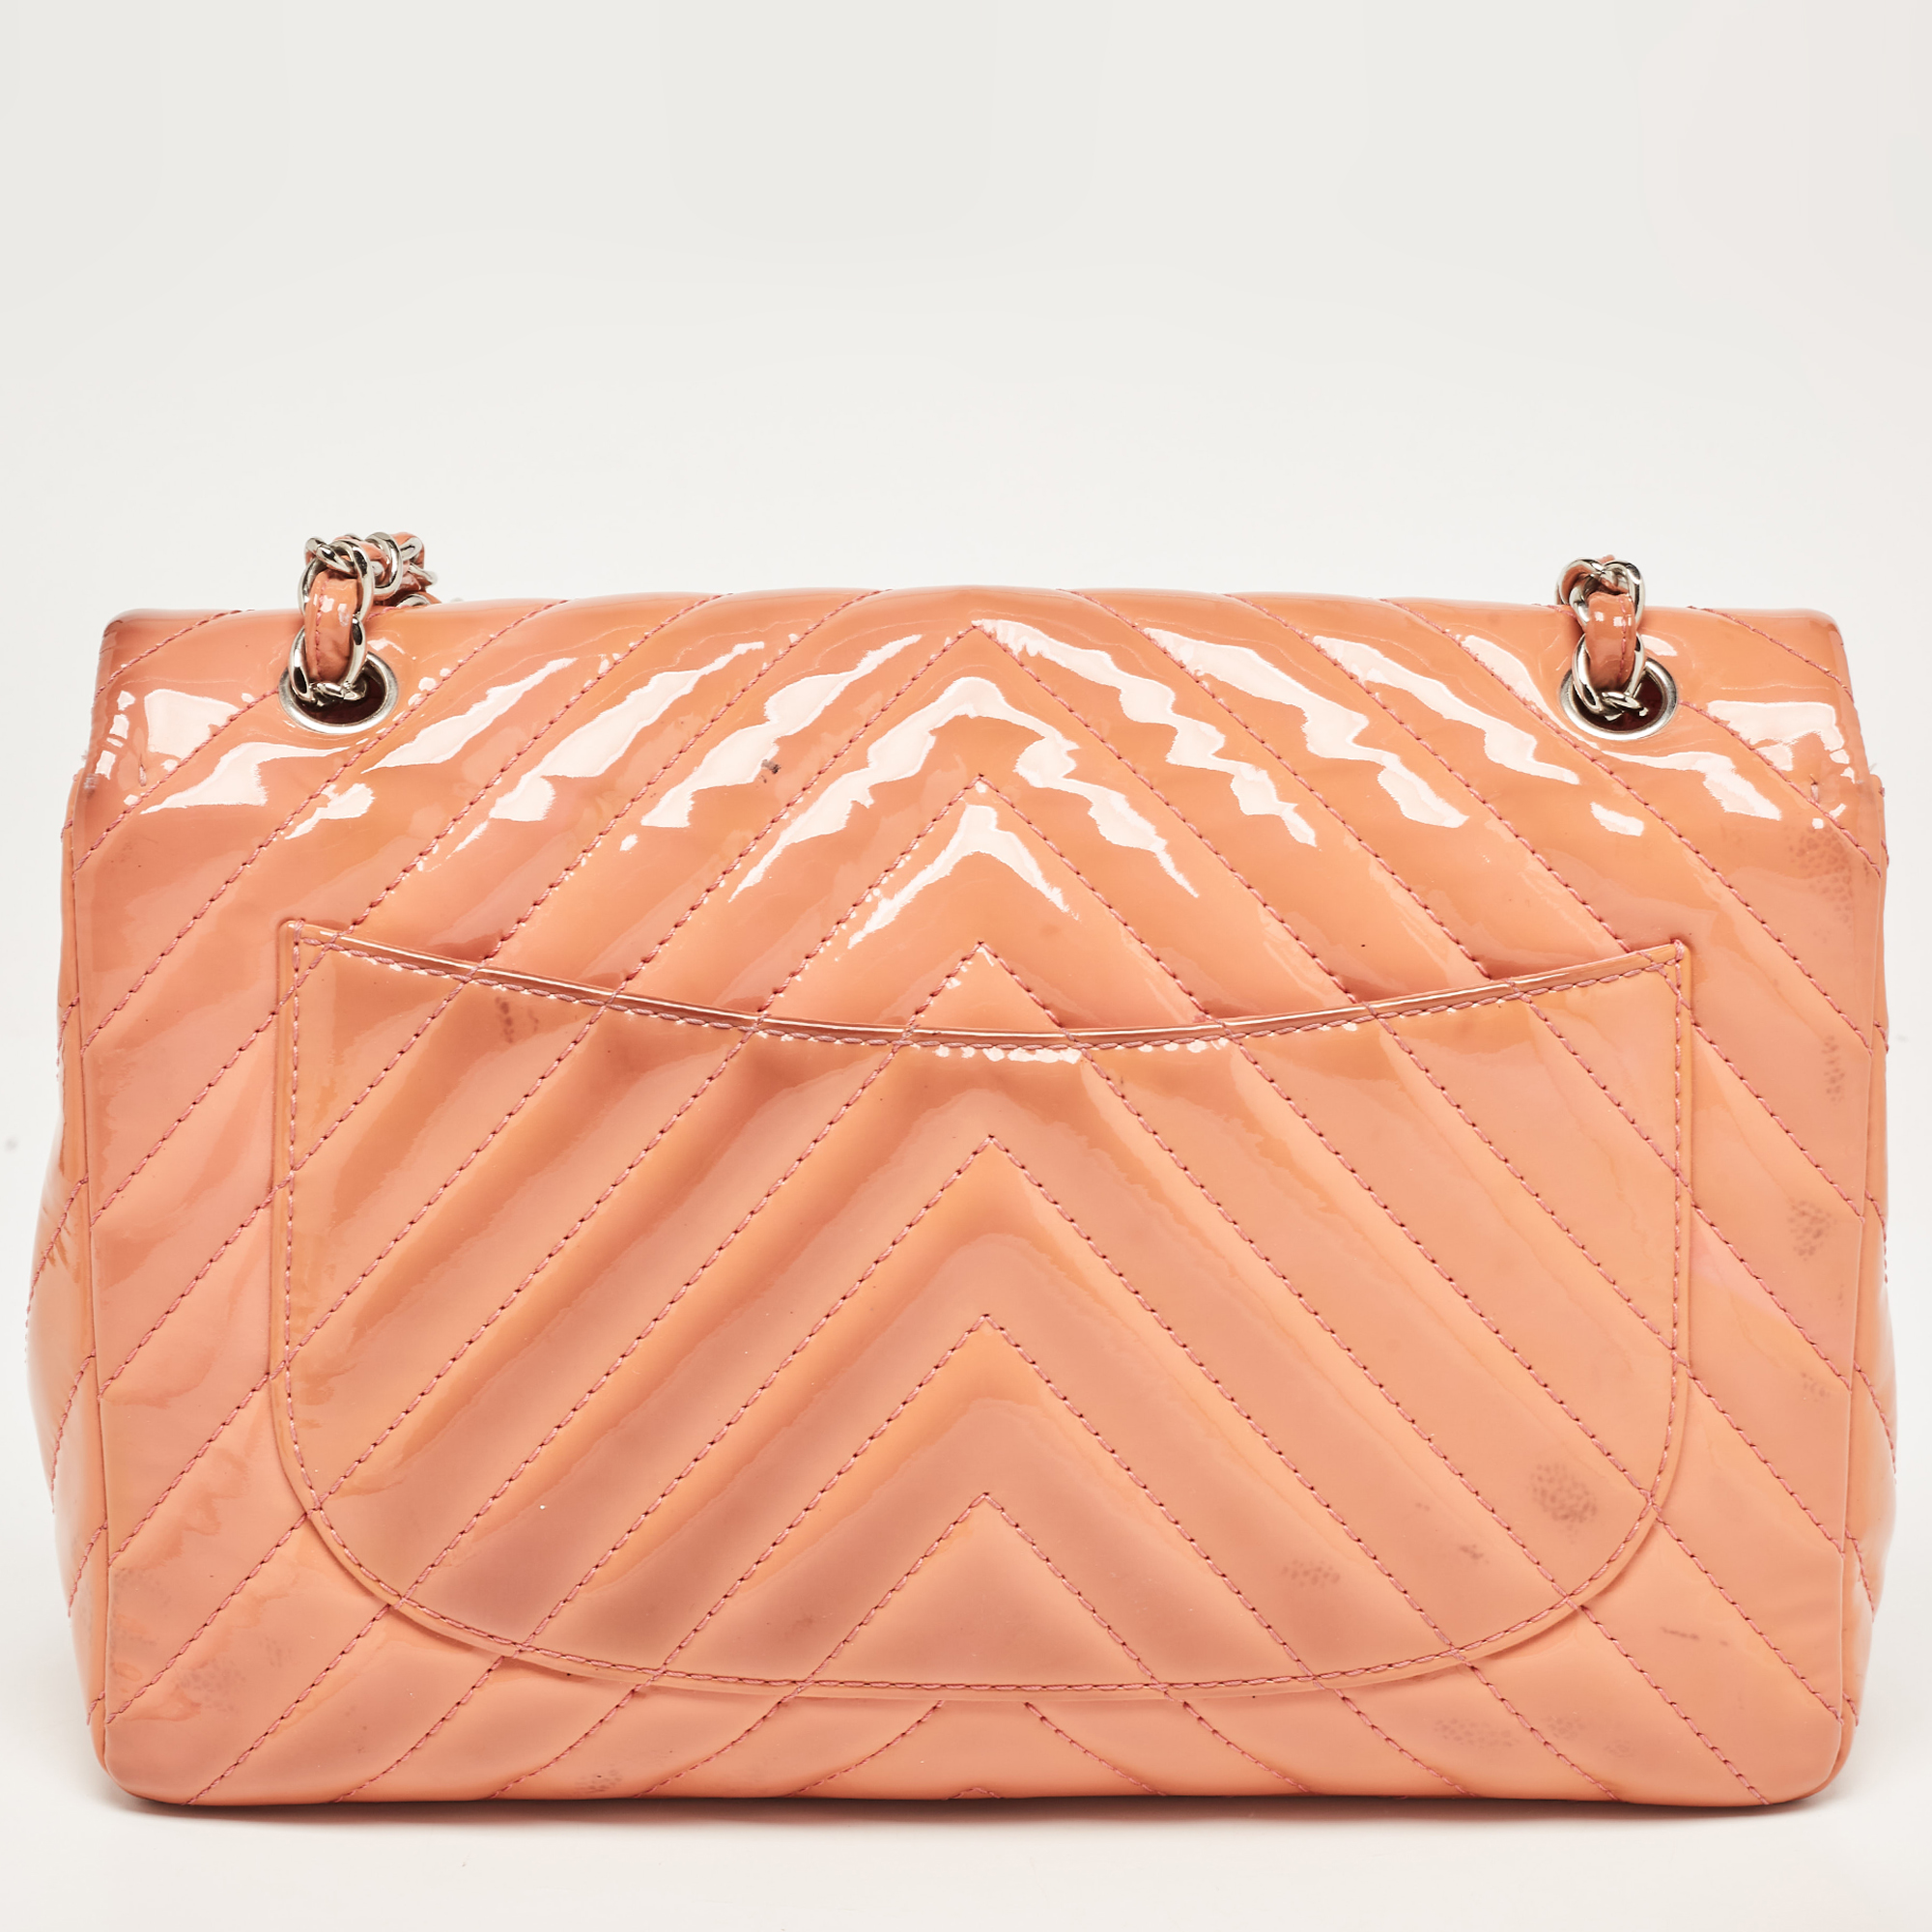 Chanel Pink Chevron Patent Leather Jumbo Classic Single Flap Bag